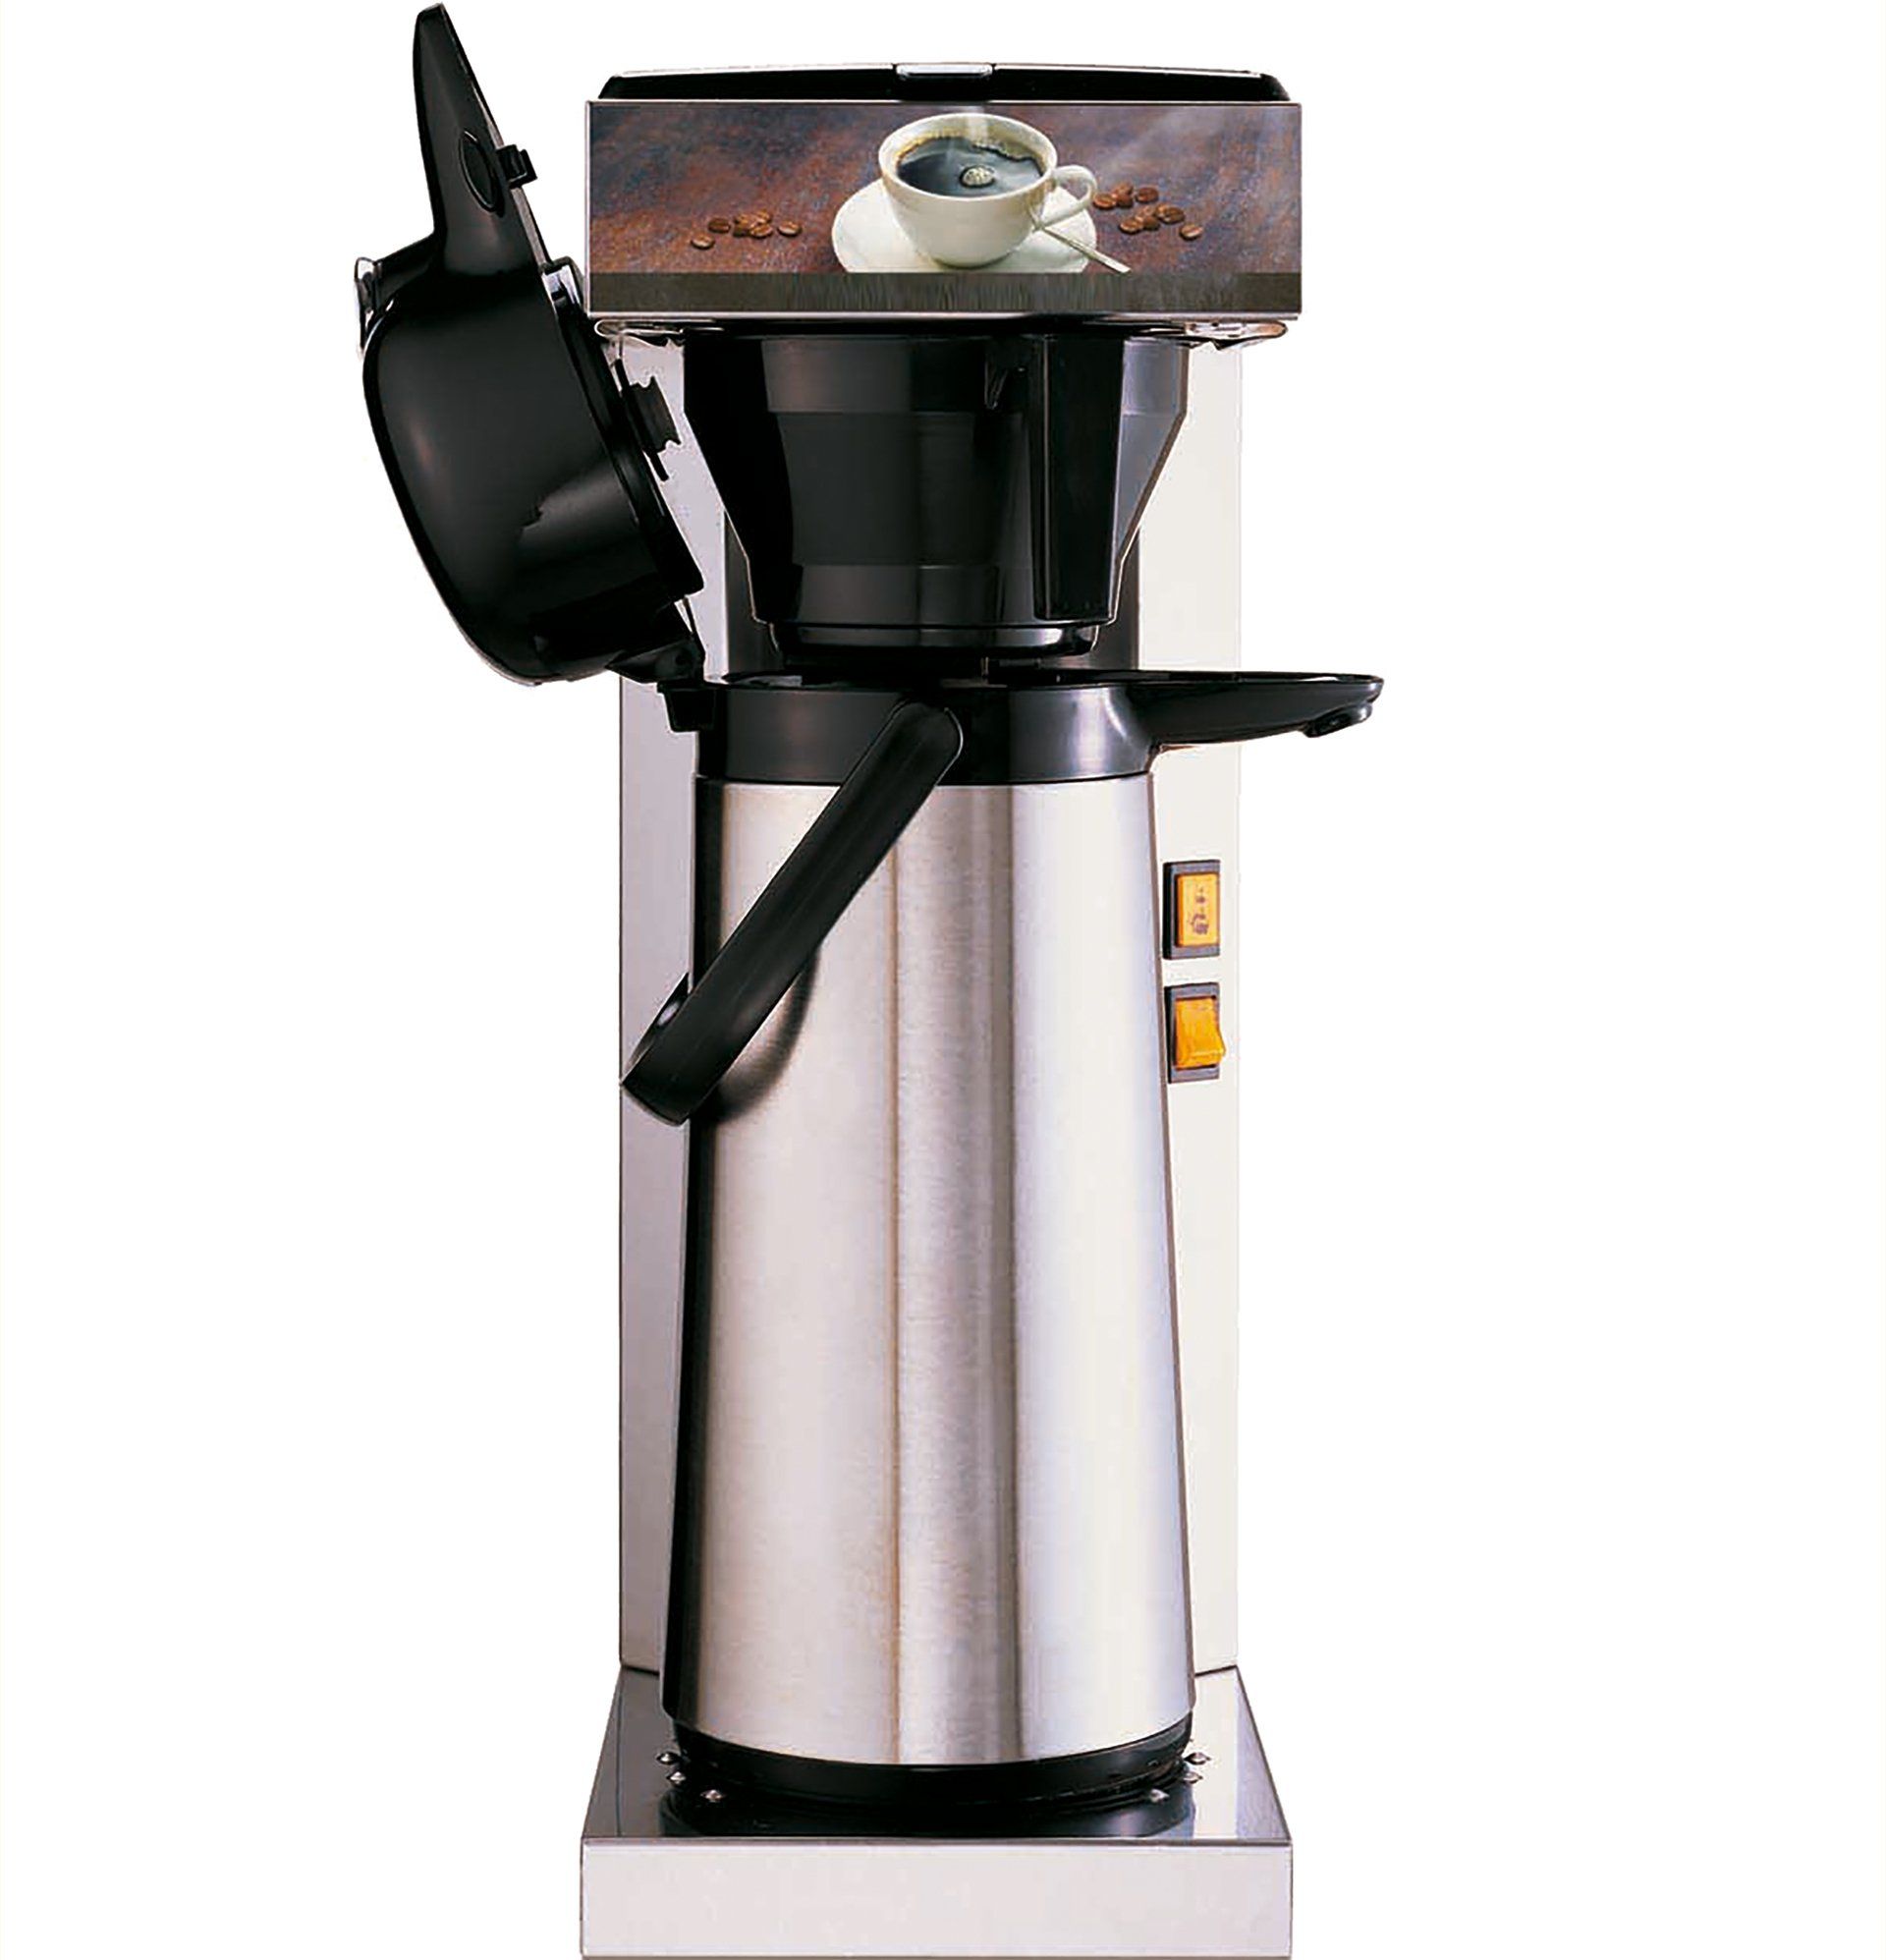 Schnellfilter Kaffeemaschine Pumpkanne Bewirtung Konferenz Meeting Kaffee frisch